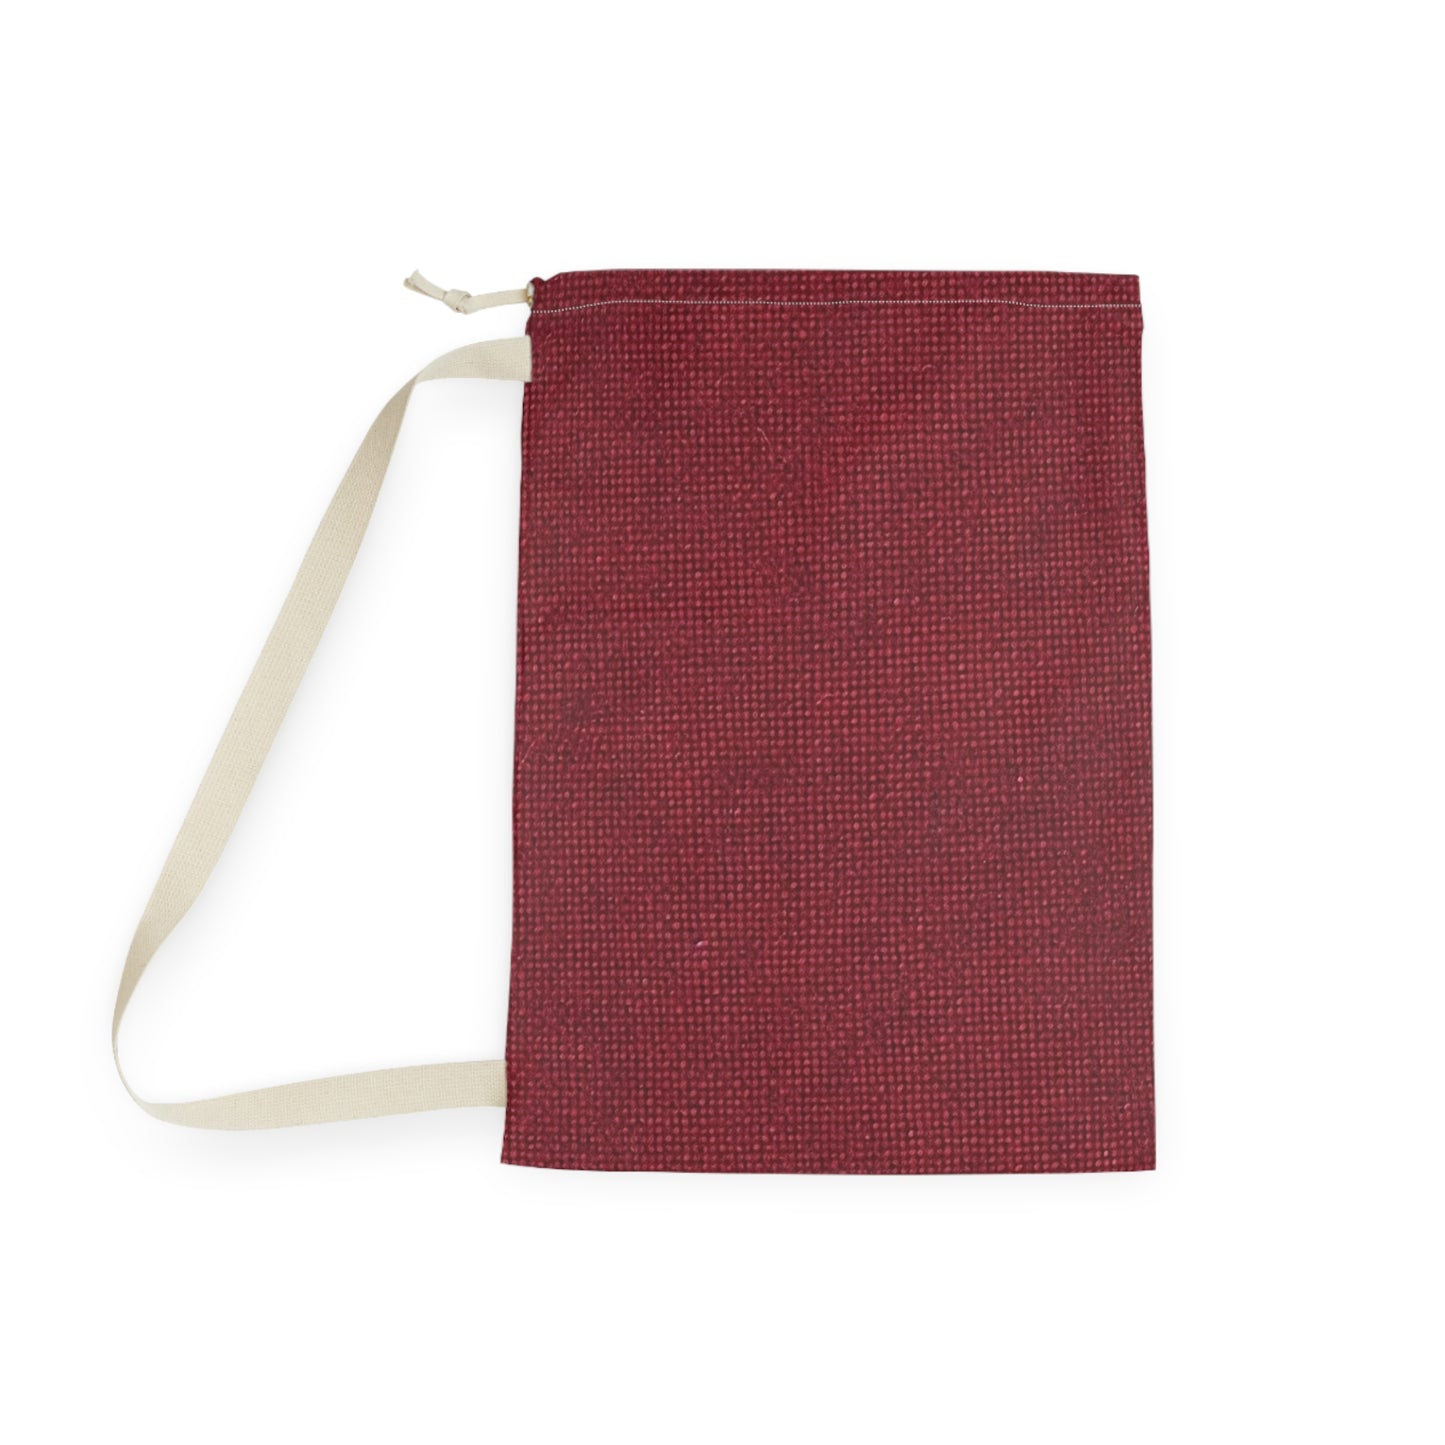 Seamless Texture - Maroon/Burgundy Denim-Inspired Fabric - Laundry Bag